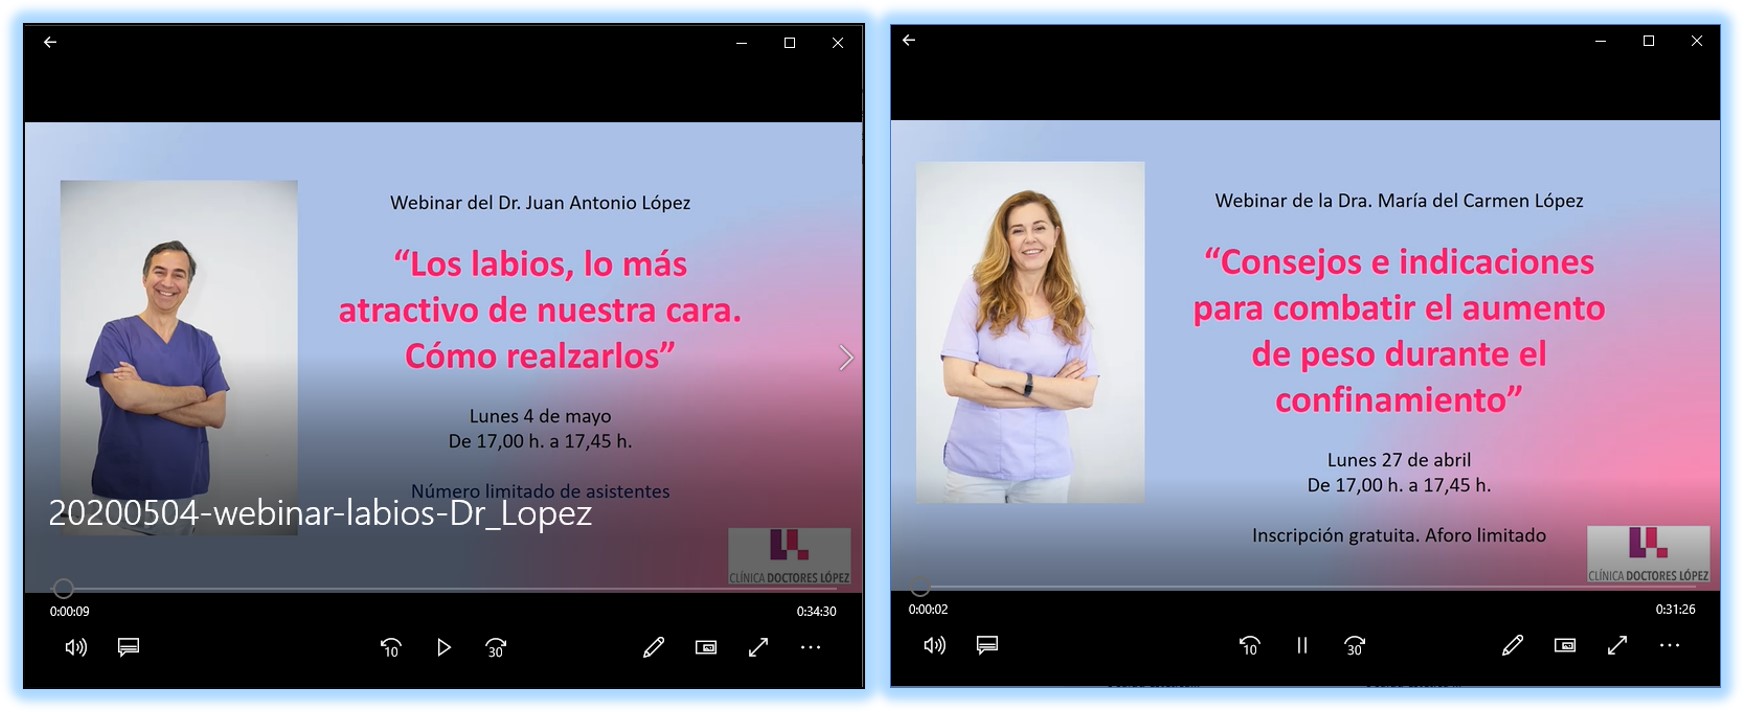 Doctors López webinars